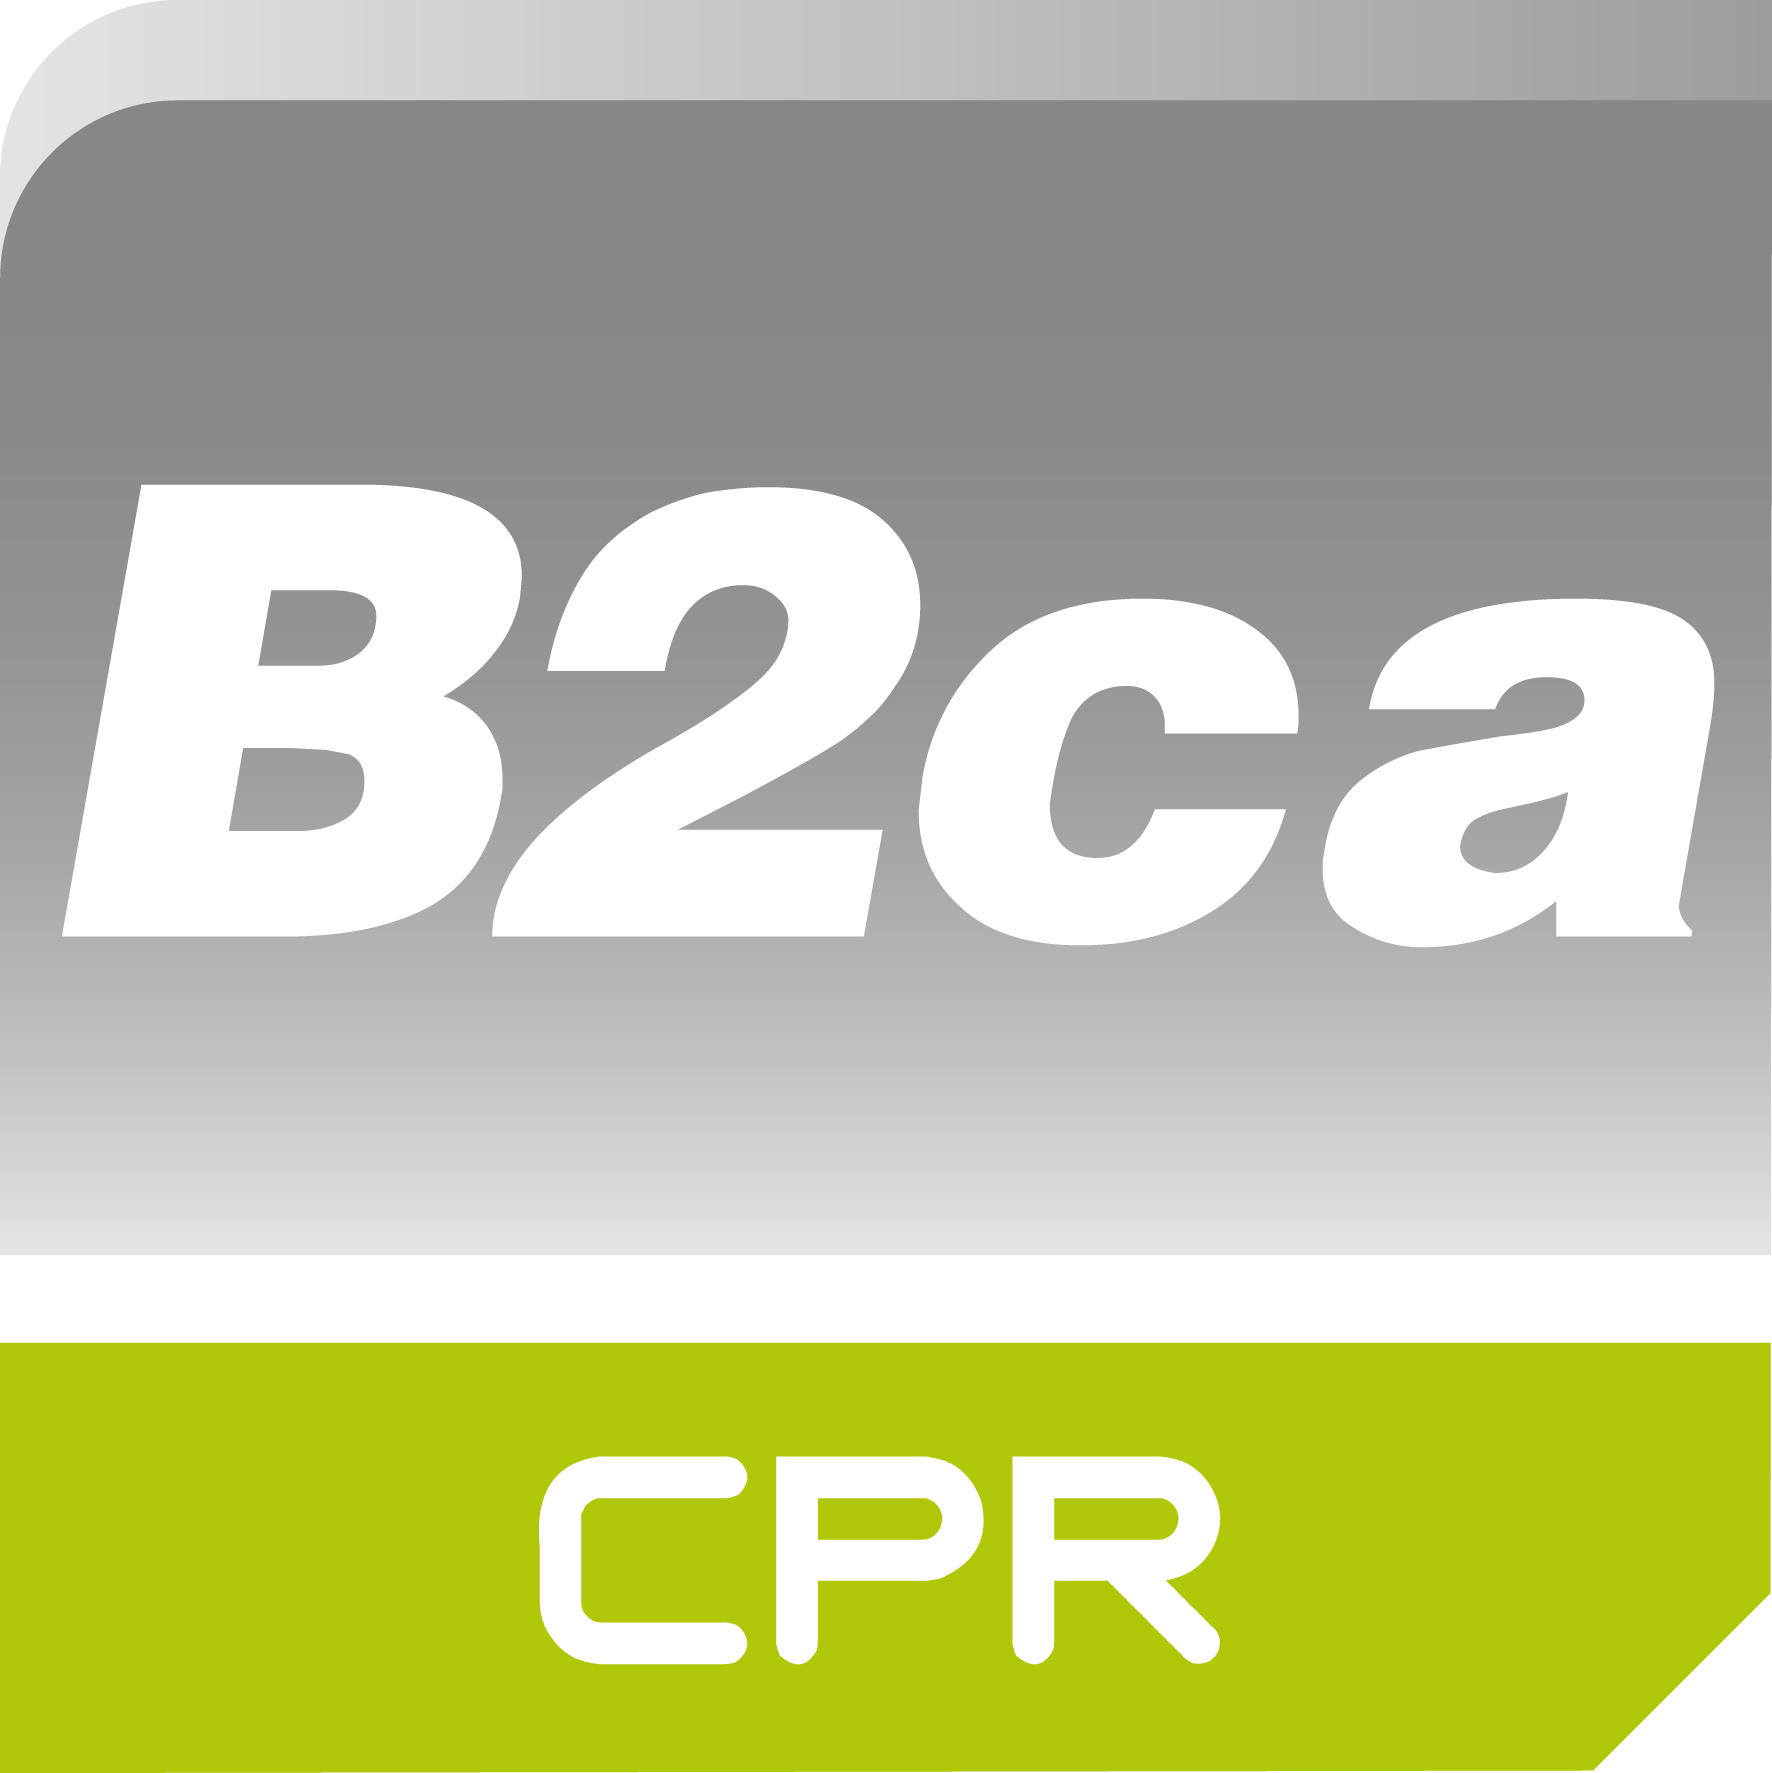 CPR-B2ca